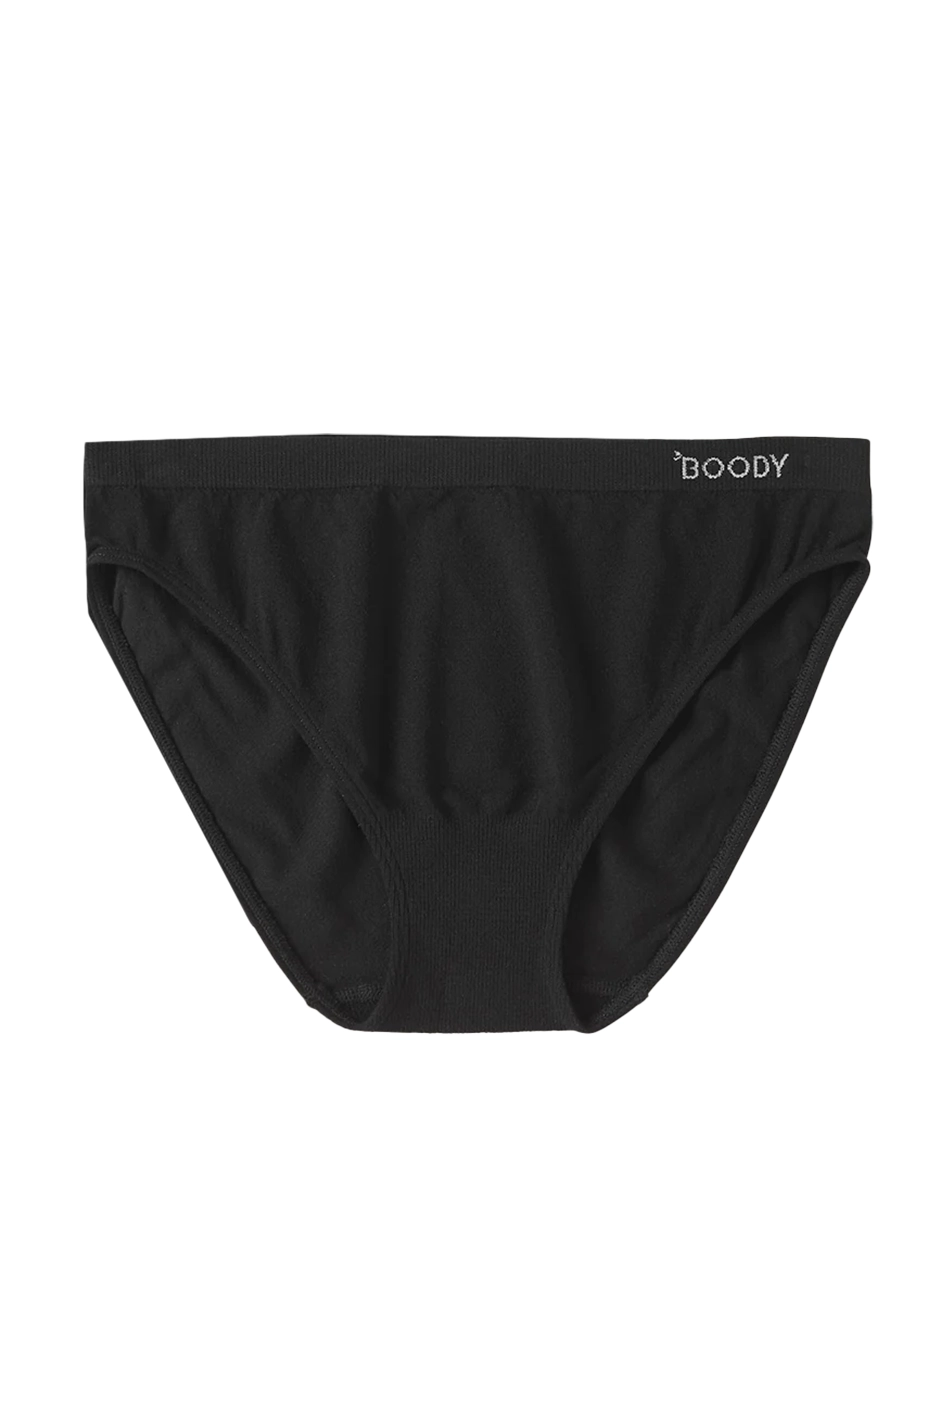 Boody S Women's Black Classic Bikini Underwear - Ace Hardware